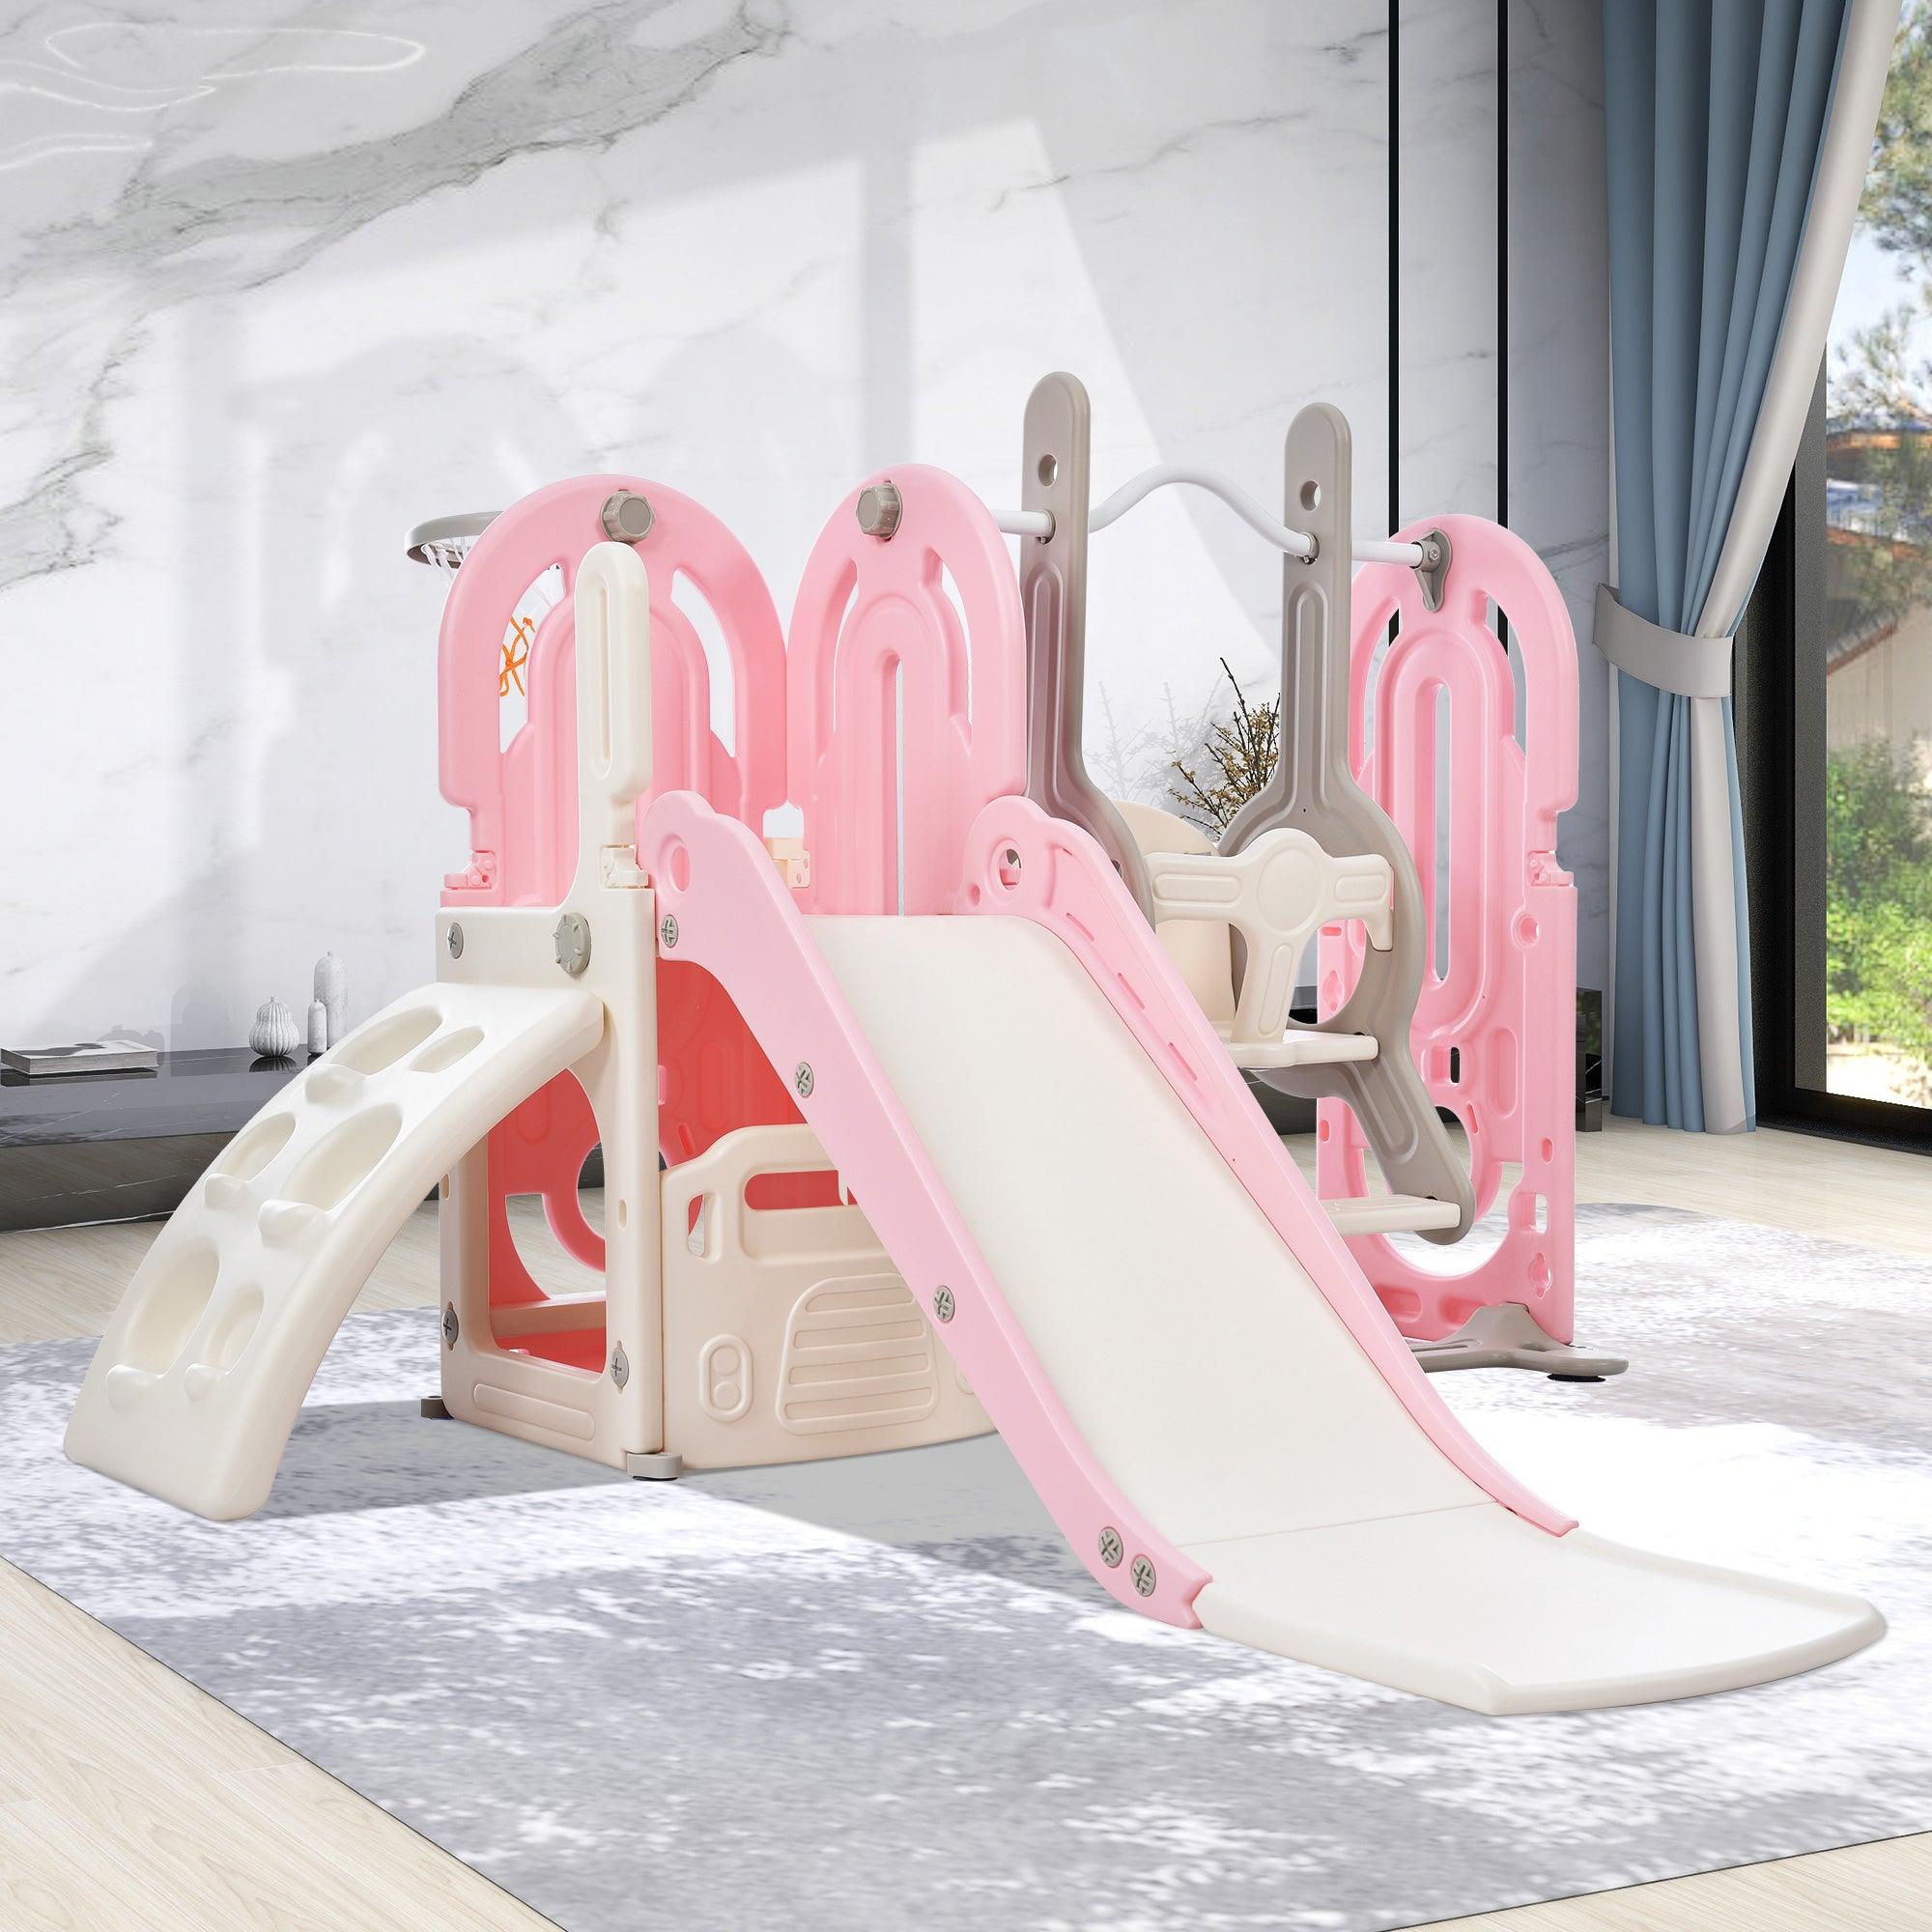 🆓🚛 Toddler Slide & Swing Set 5 in 1, Kids Playground Climber Slide Playset With Basketball Hoop Freestanding Combination for Babies Indoor & Outdoor, Pink & Gray